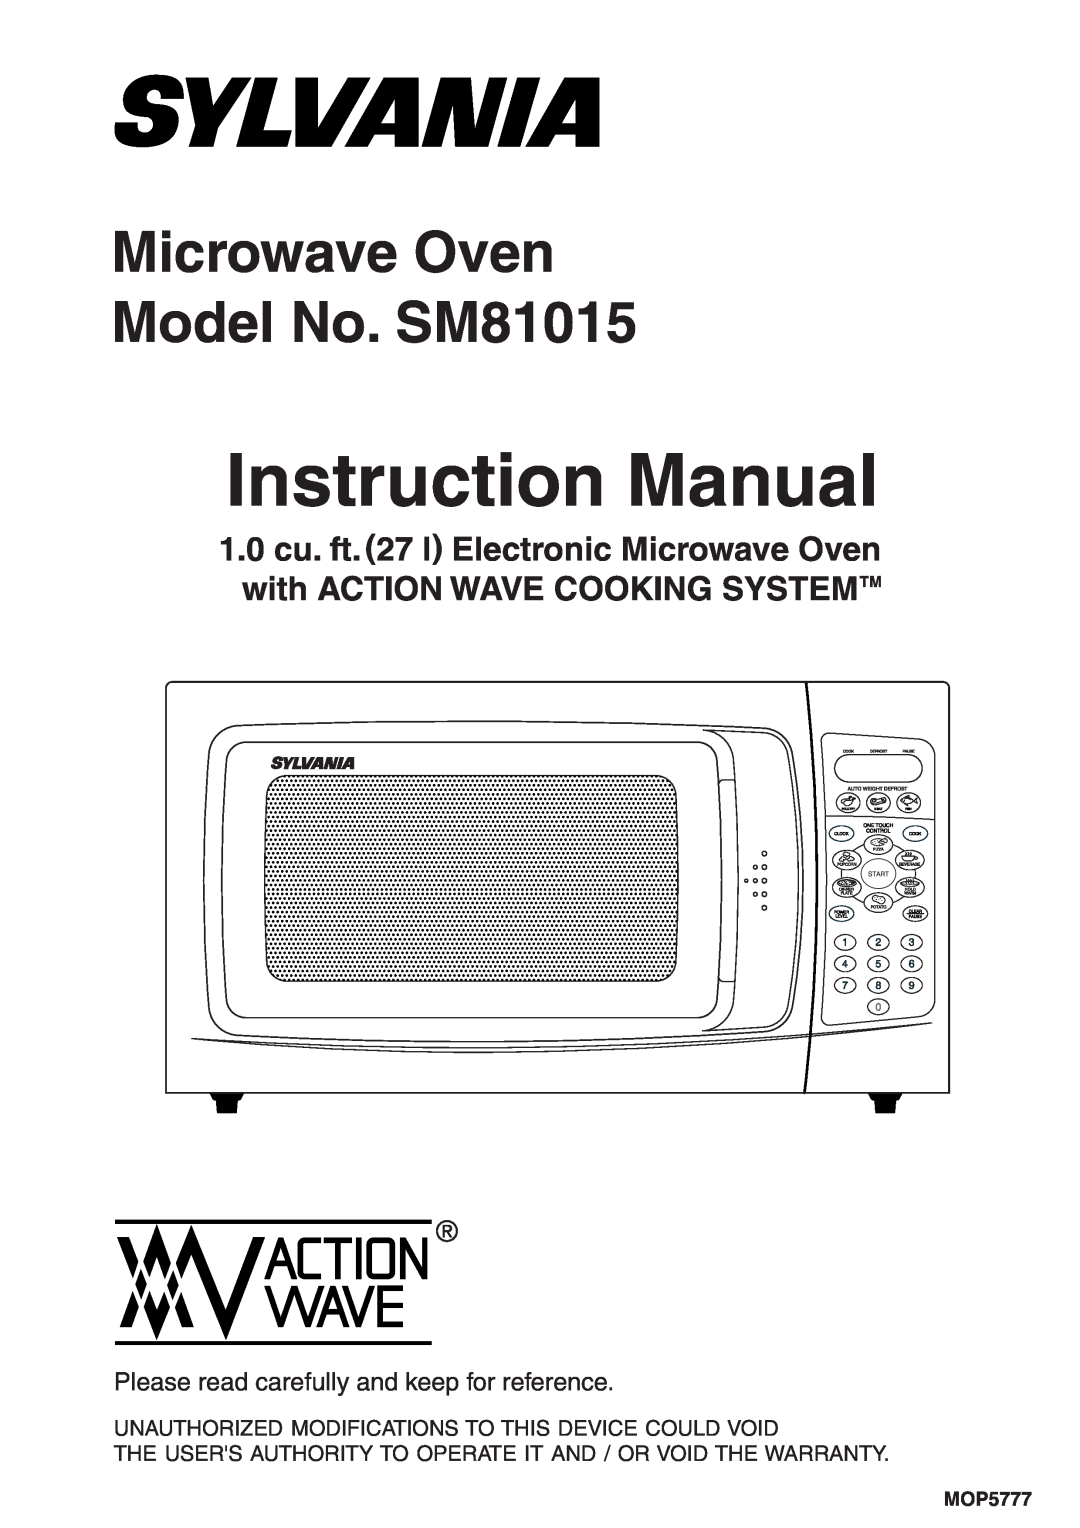 Sylvania instruction manual Microwave Oven Model No. SM81015 